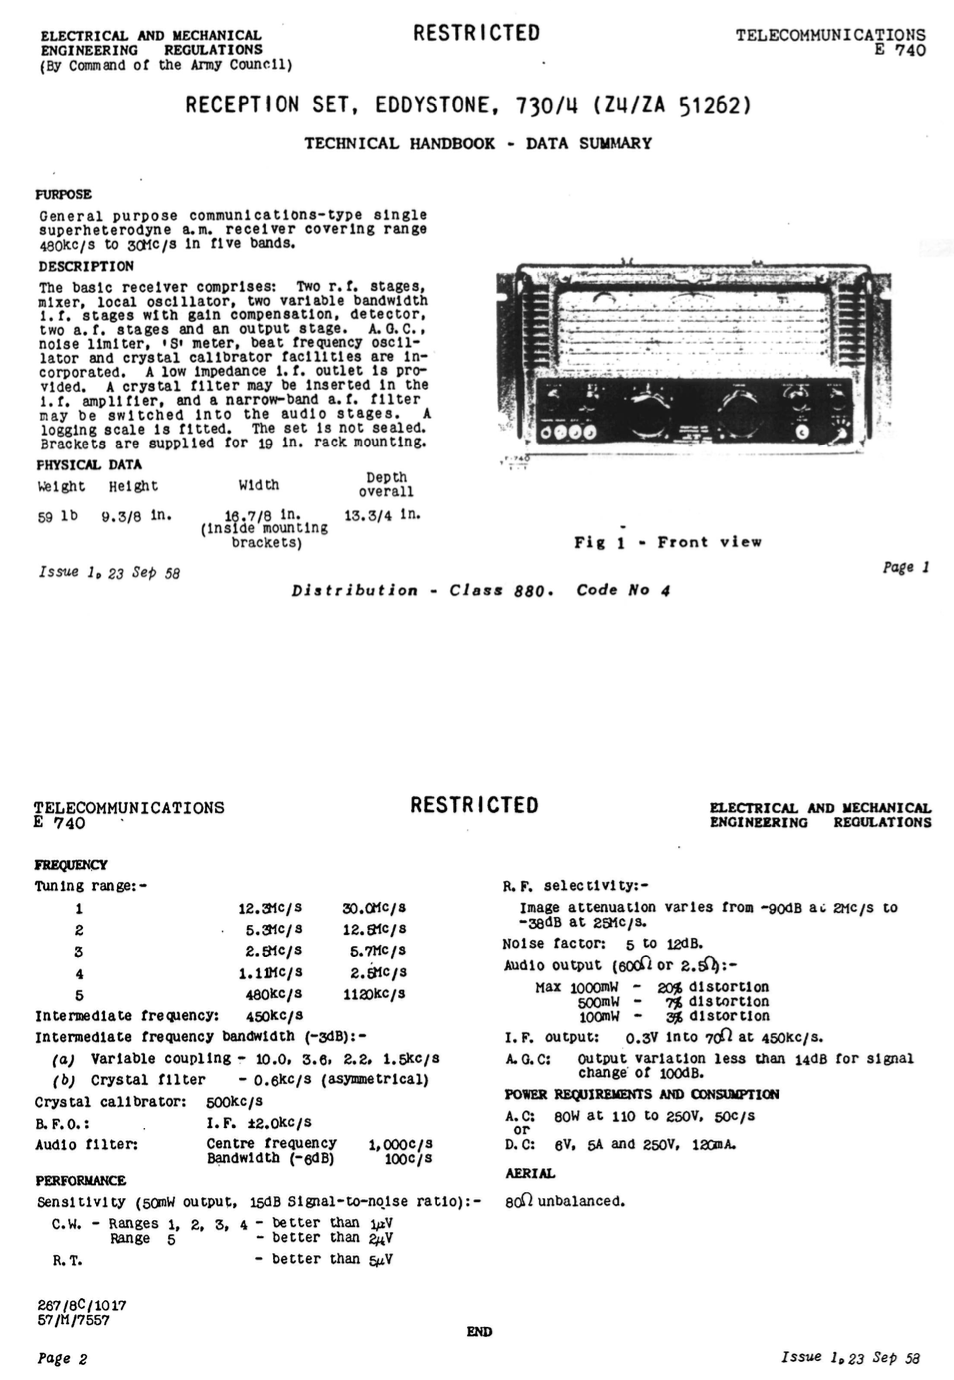 Eddystone Type 730-4 - Military Technical Handbook E-740